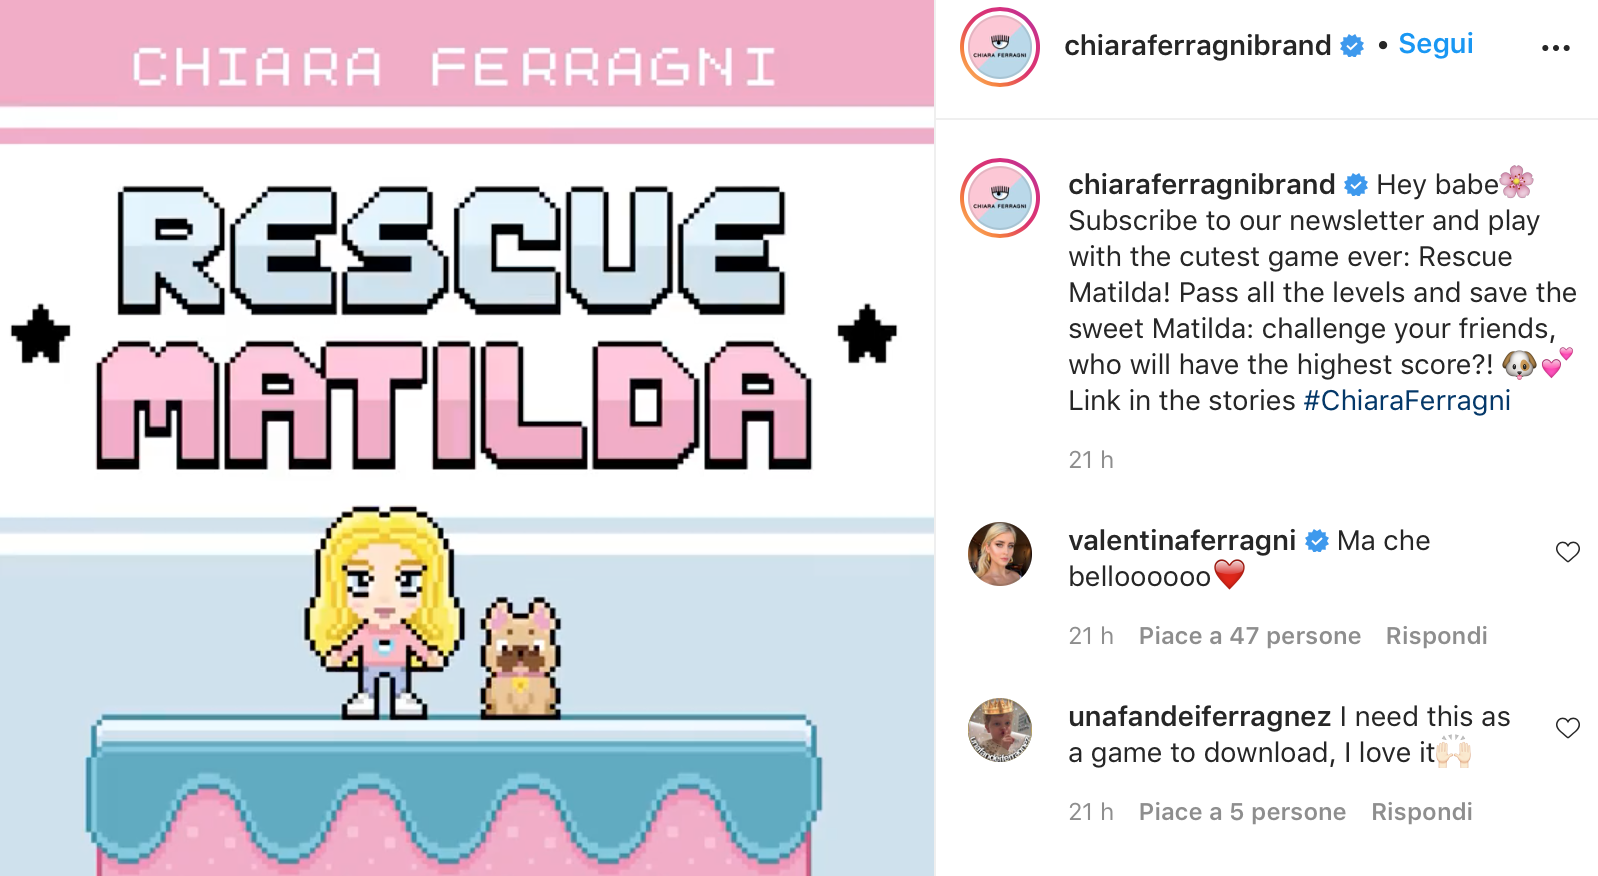 Chiara ferrigni videogame rescue Matilda